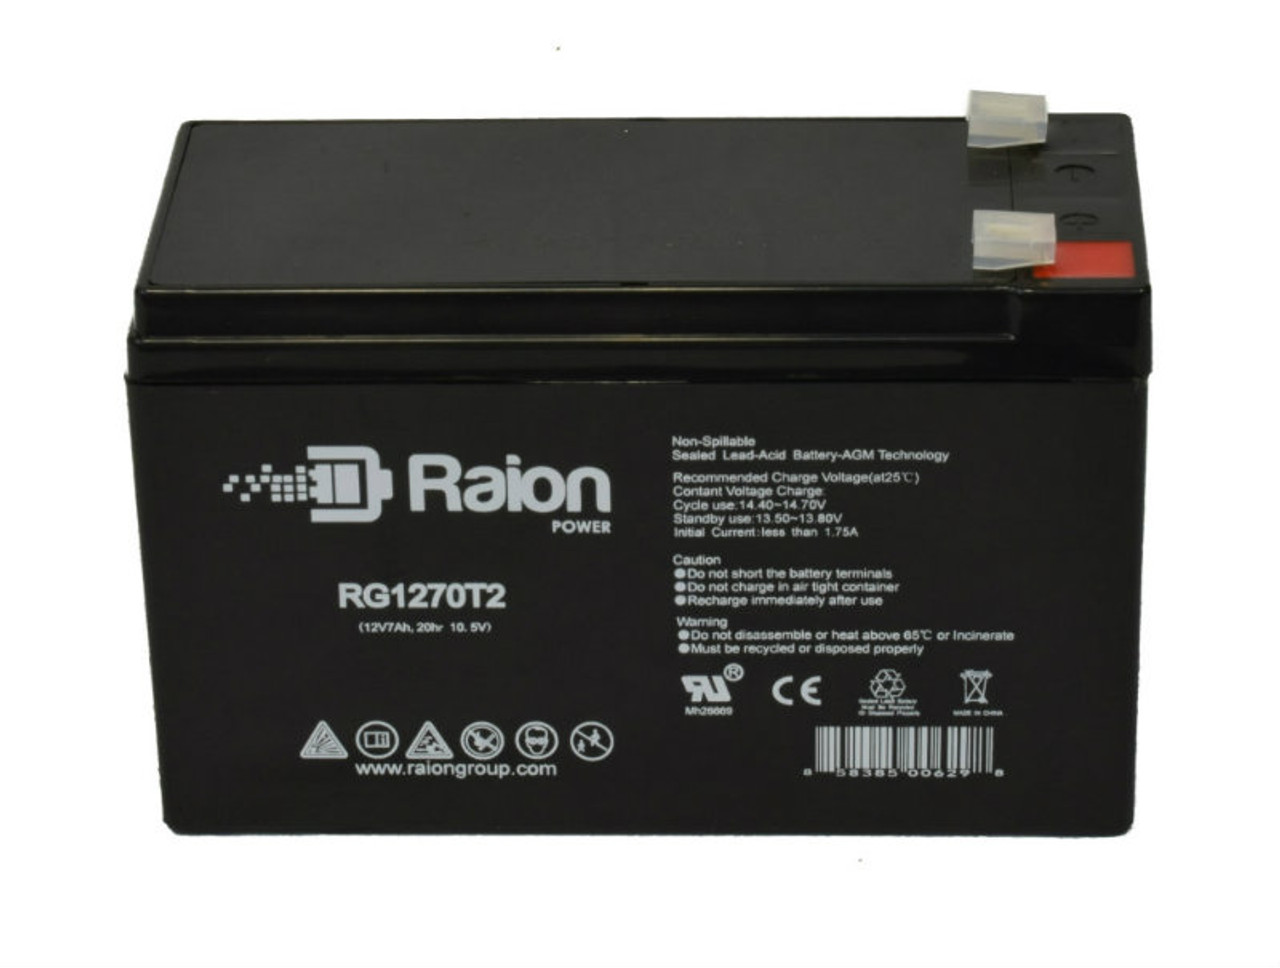 Raion Power RG1270T1 12V 7Ah Lead Acid Battery for Savaria Stairfriend Stairlift